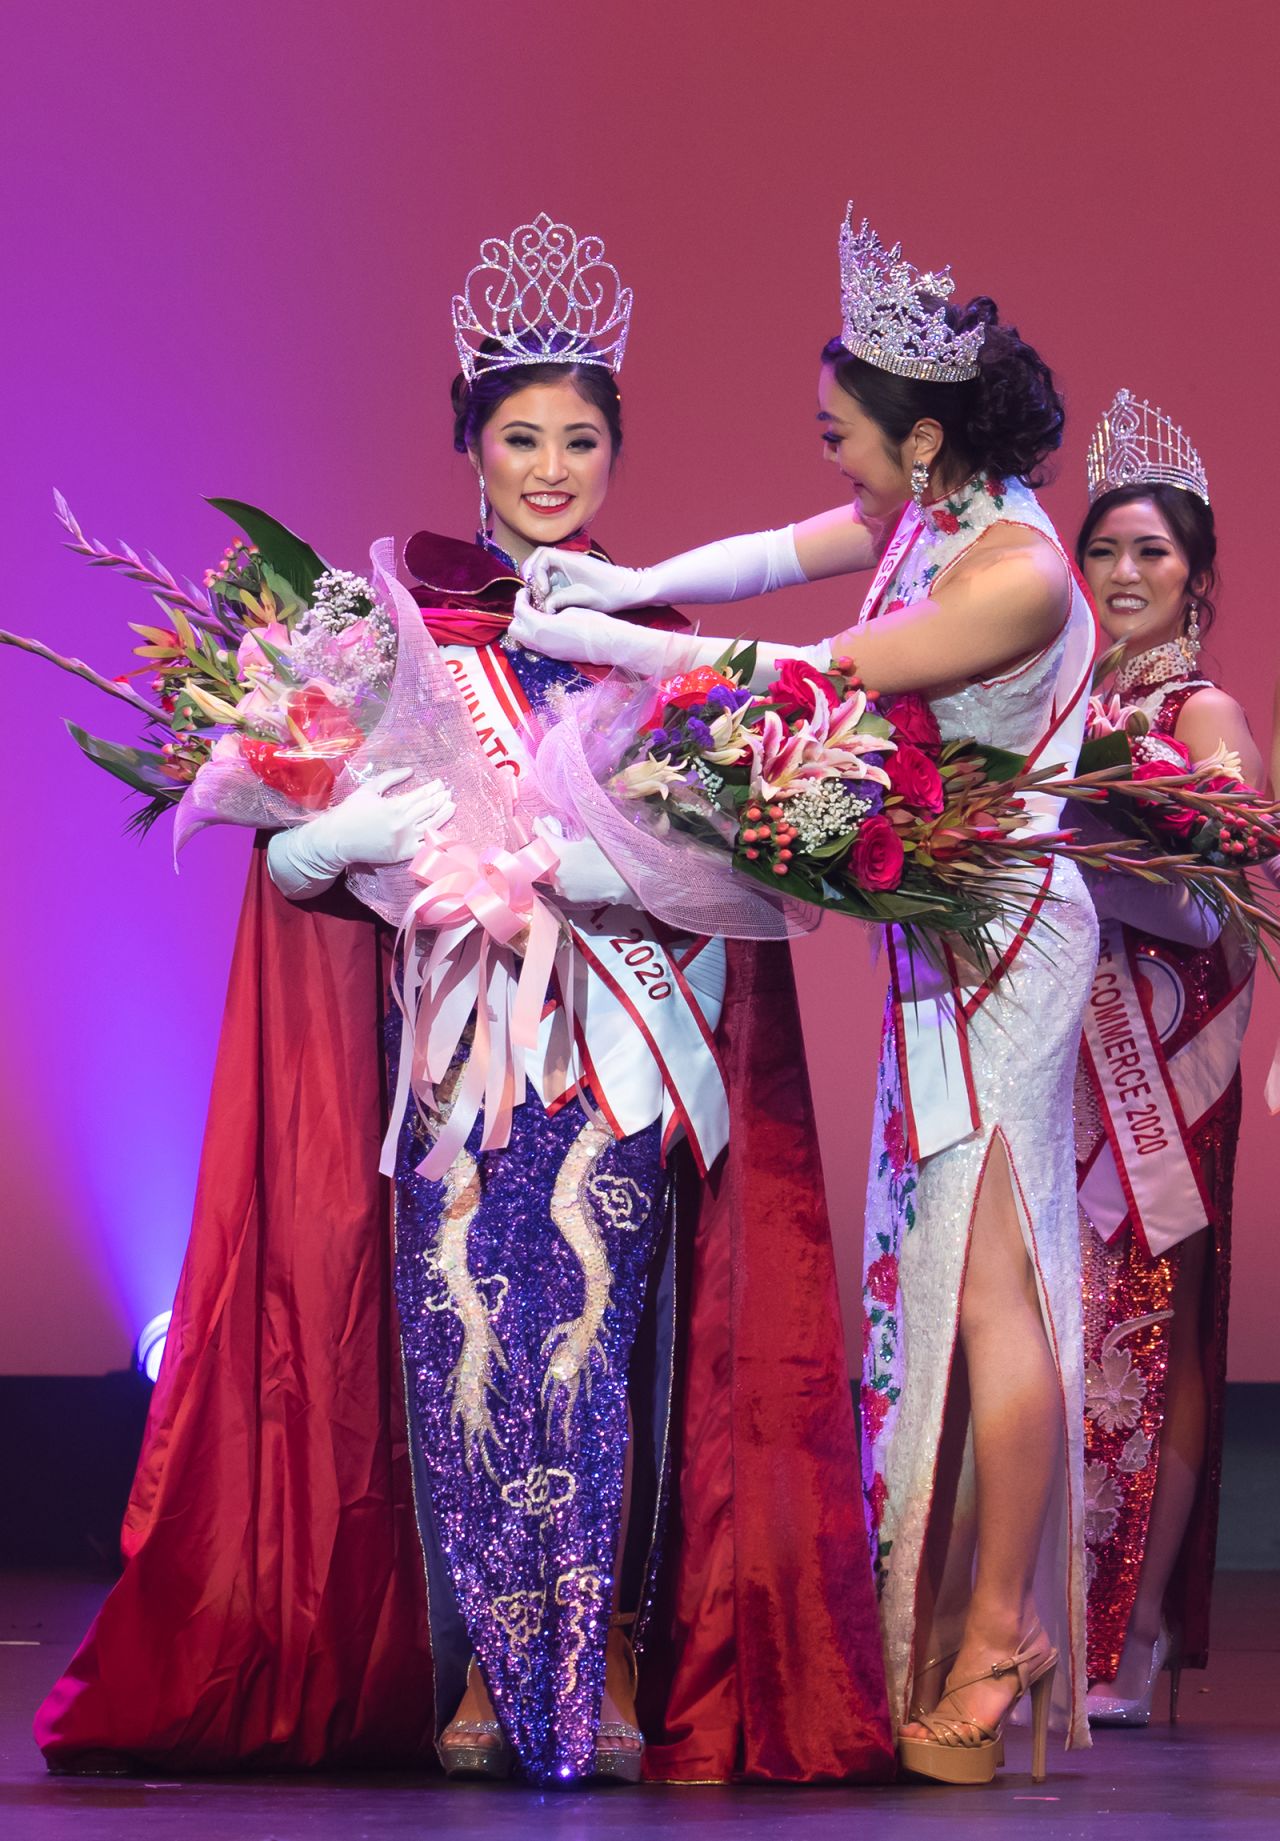 Lauren Yang crowned as Miss Chinatown USA in 2020.